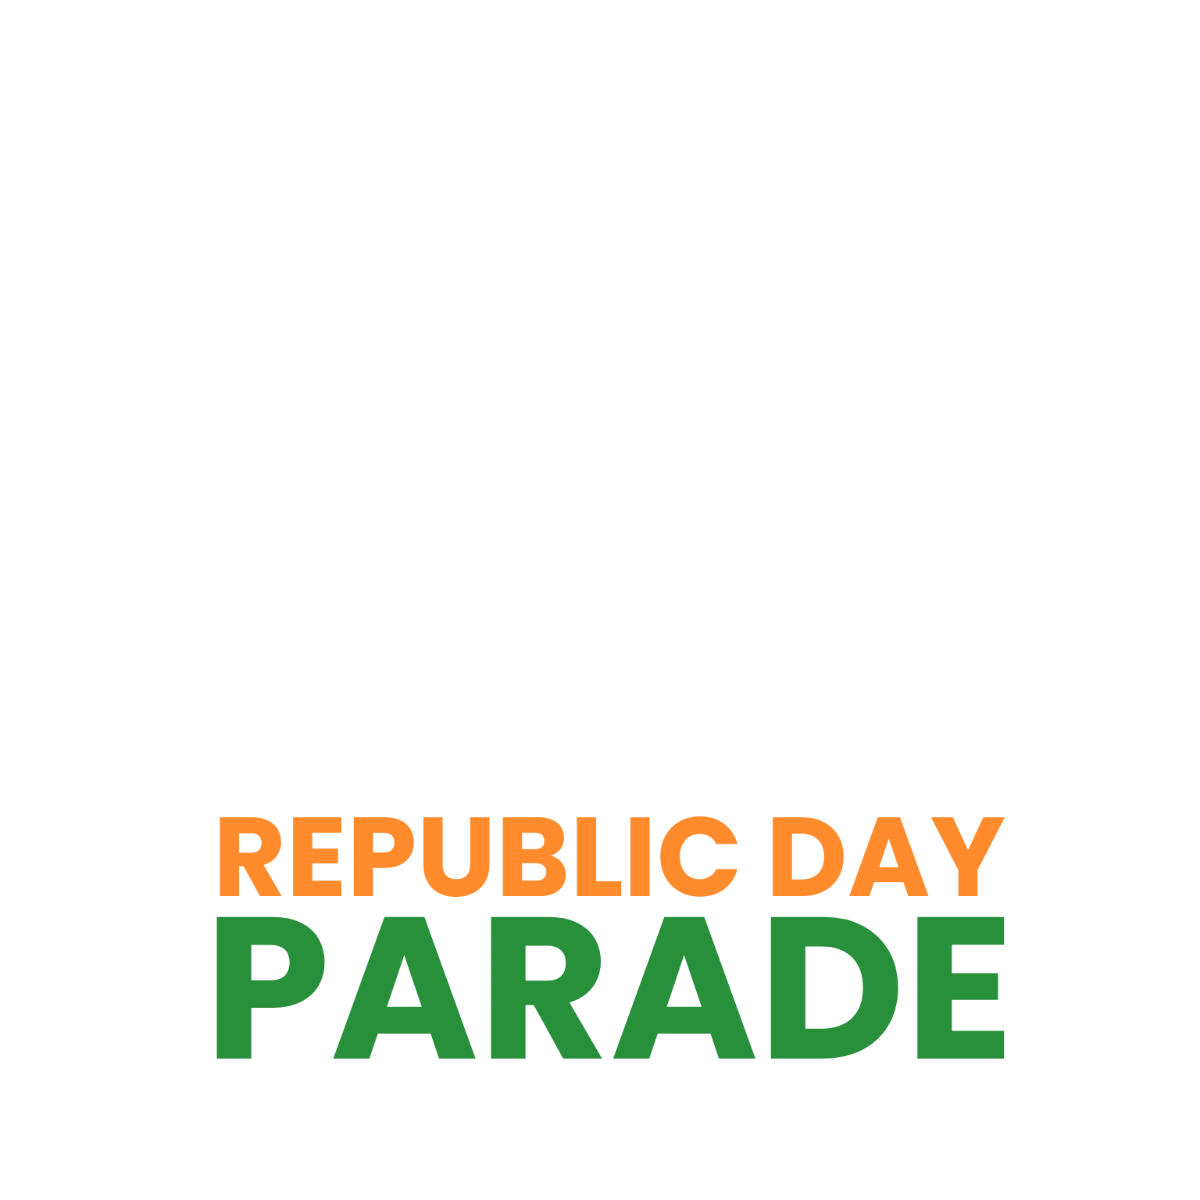 Republic Day Parade Clipart